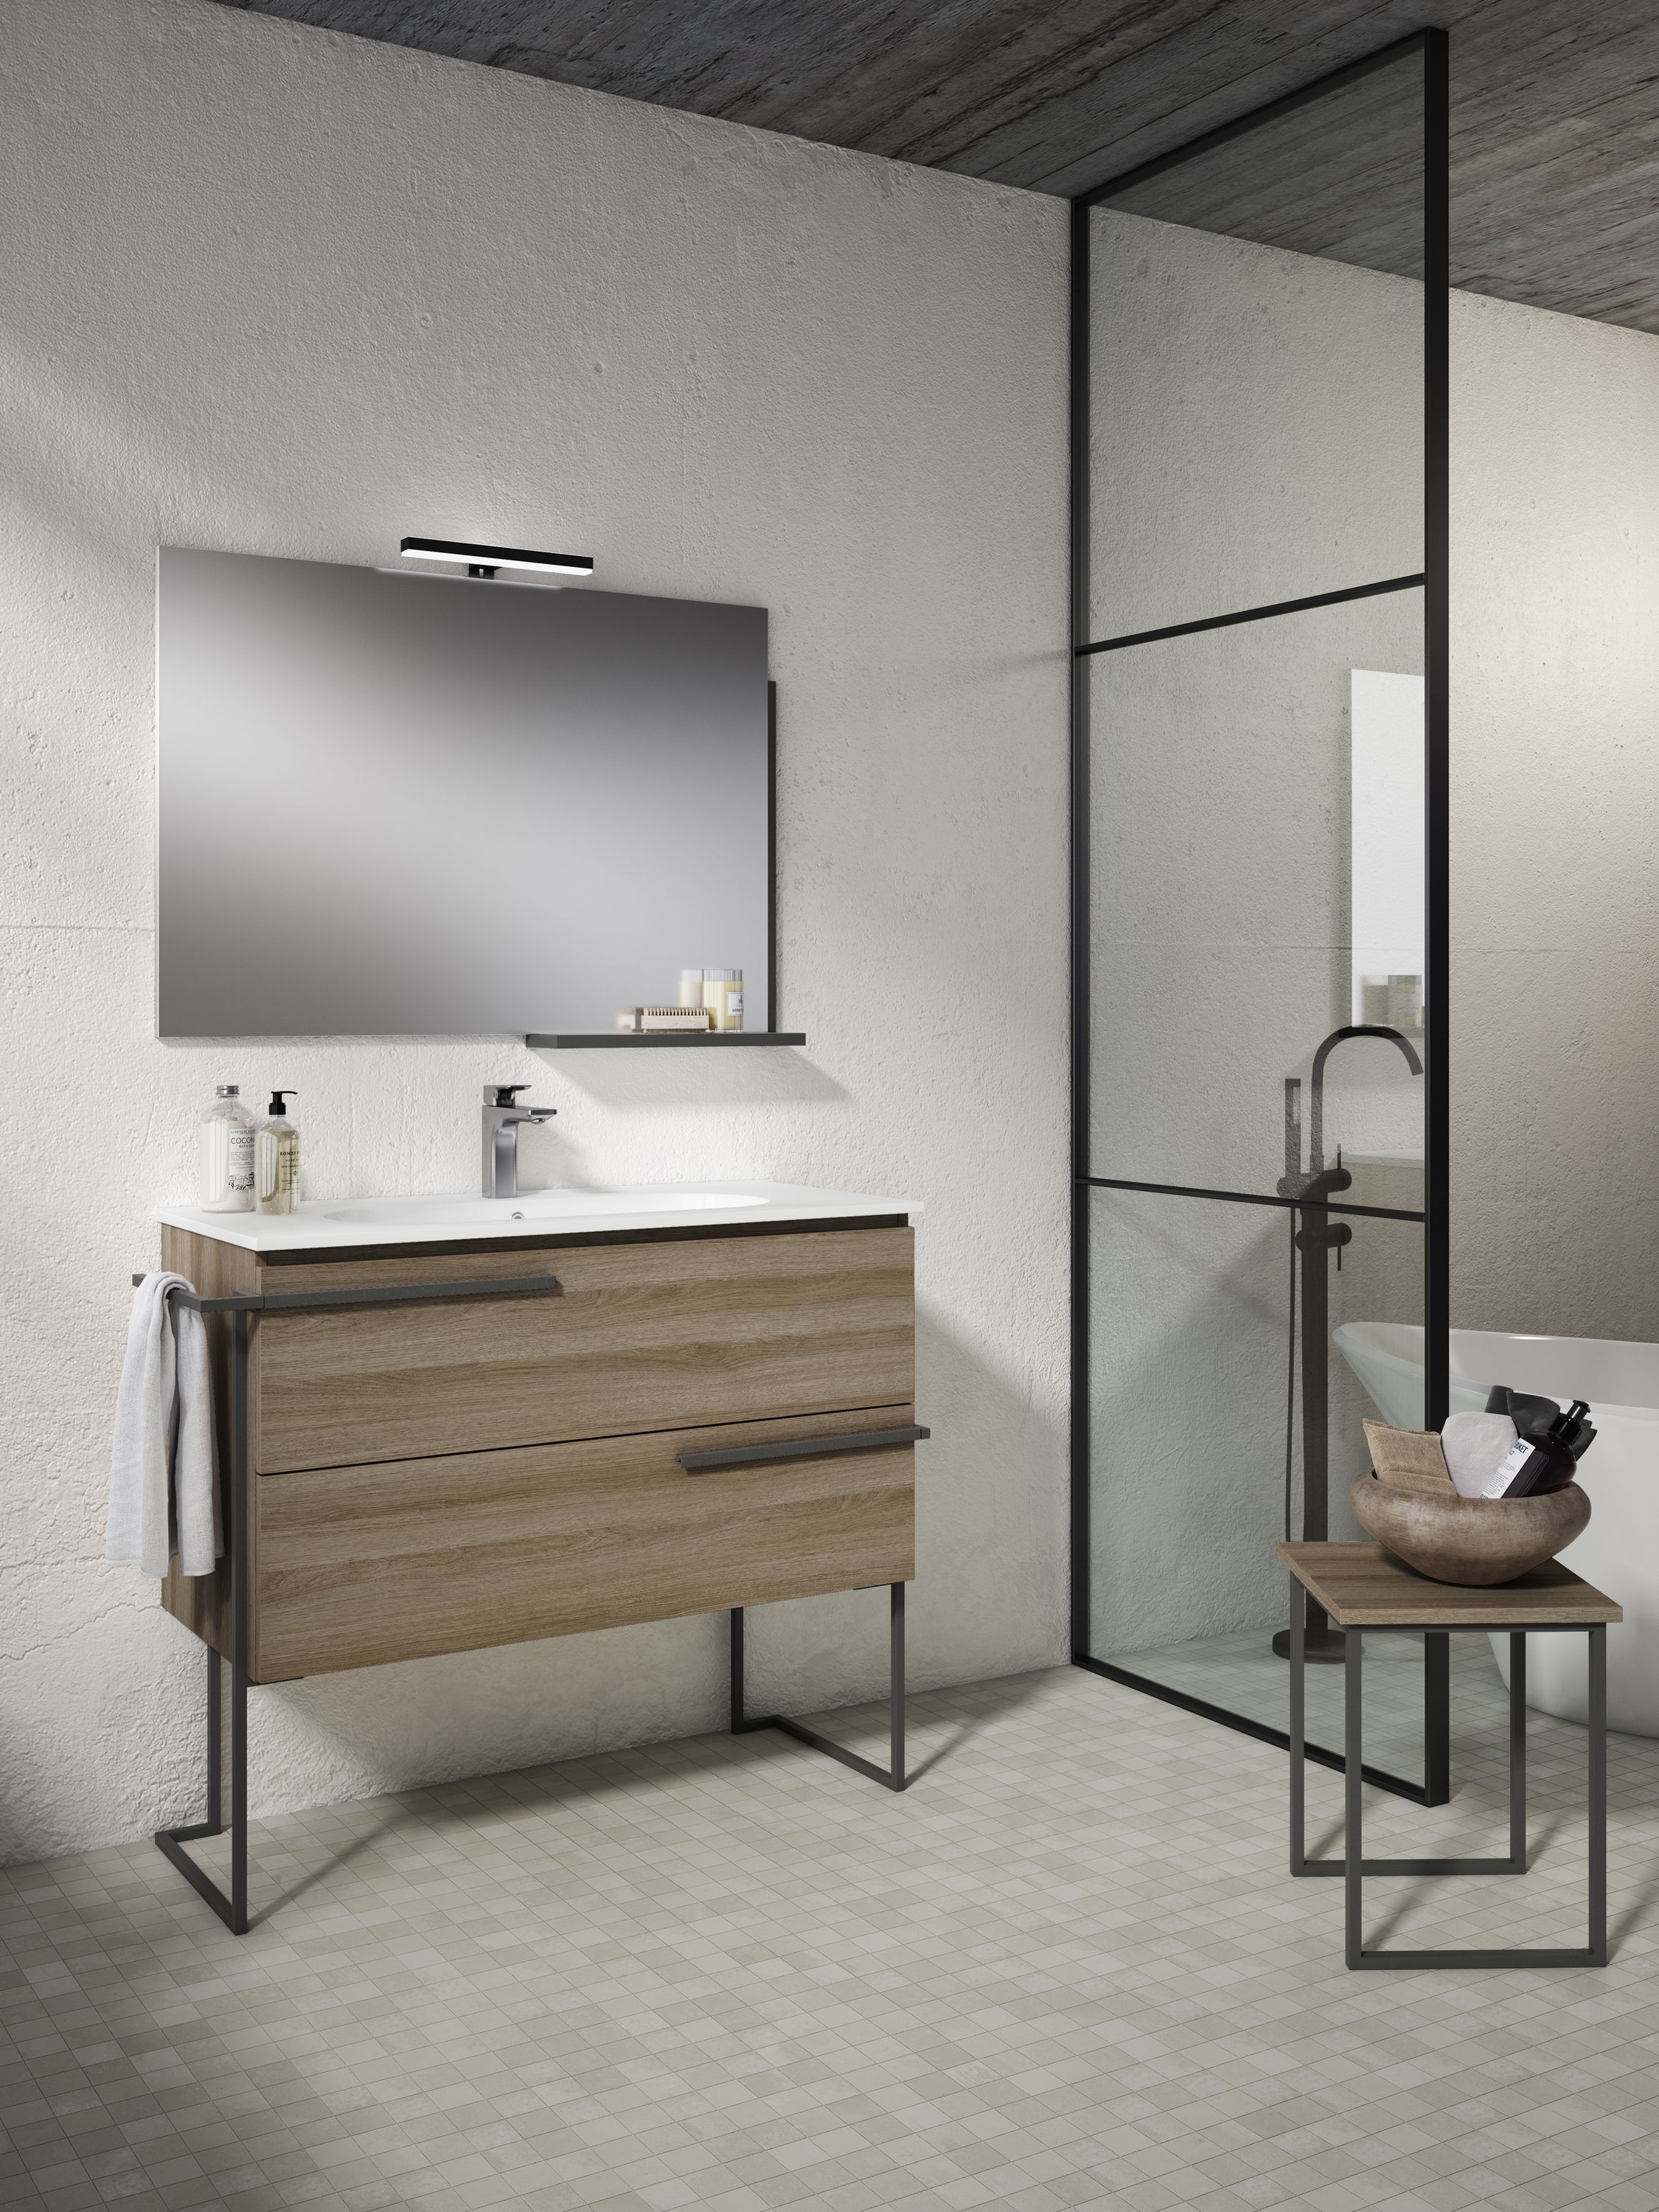 Halifax North America Wall-Mounted Bathroom Mirror Cabinet Organizer with Storage | Mathis Home